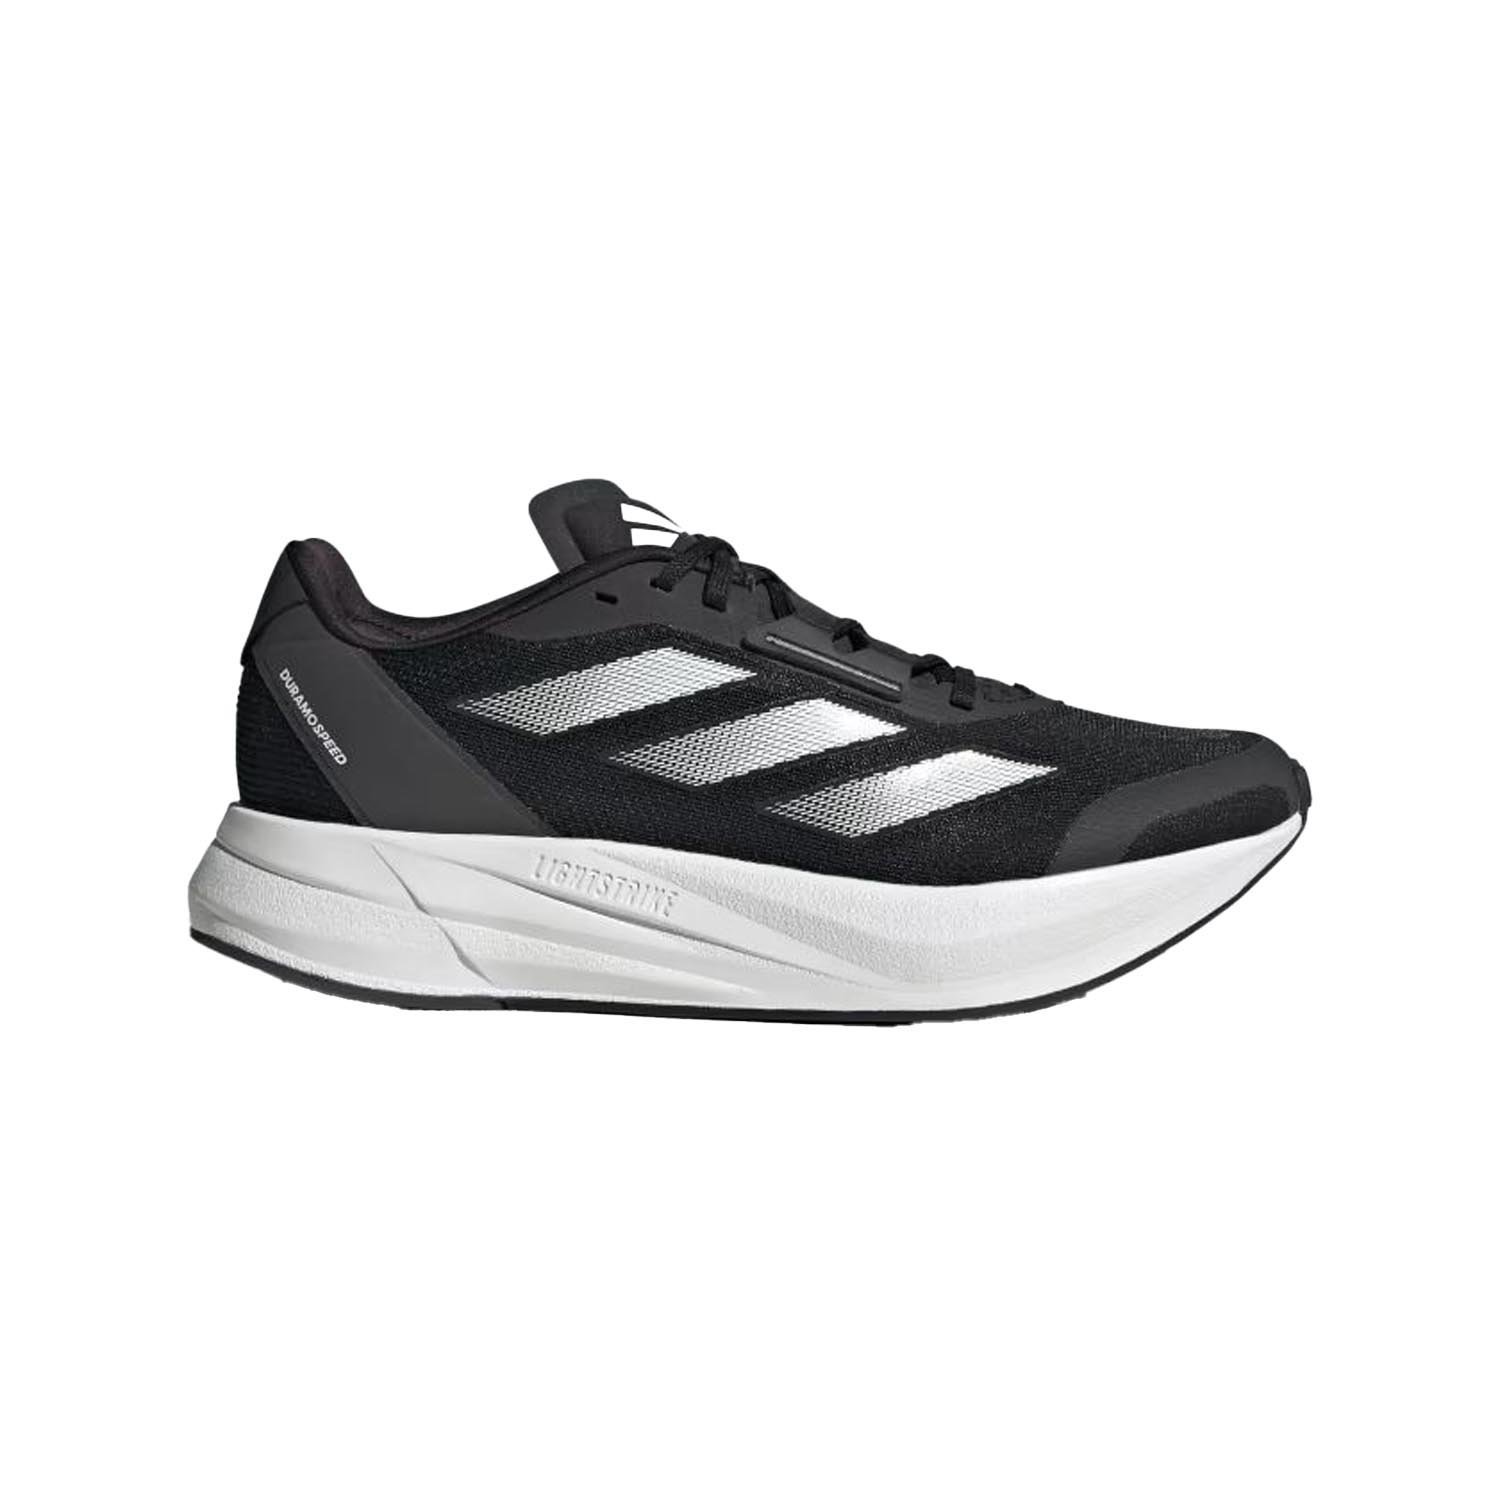 Adidas Duramo Speed Kadın Koşu Ayakkabısı - Siyah - 1